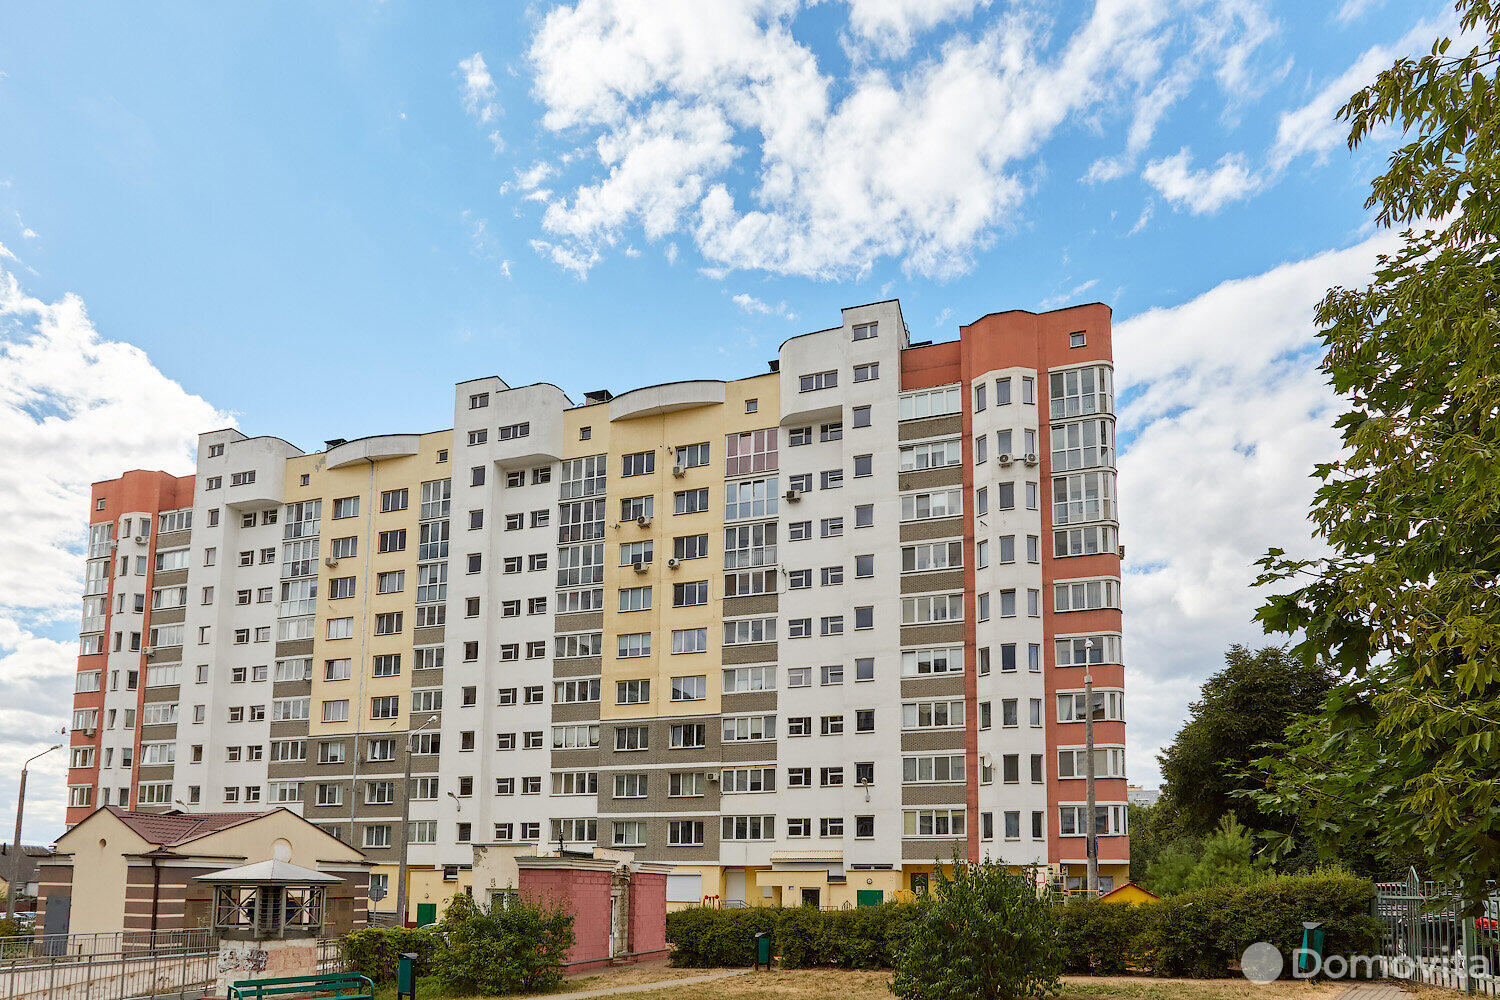 квартира, Минск, ул. Гало, д. 76, стоимость продажи 769 838 р.